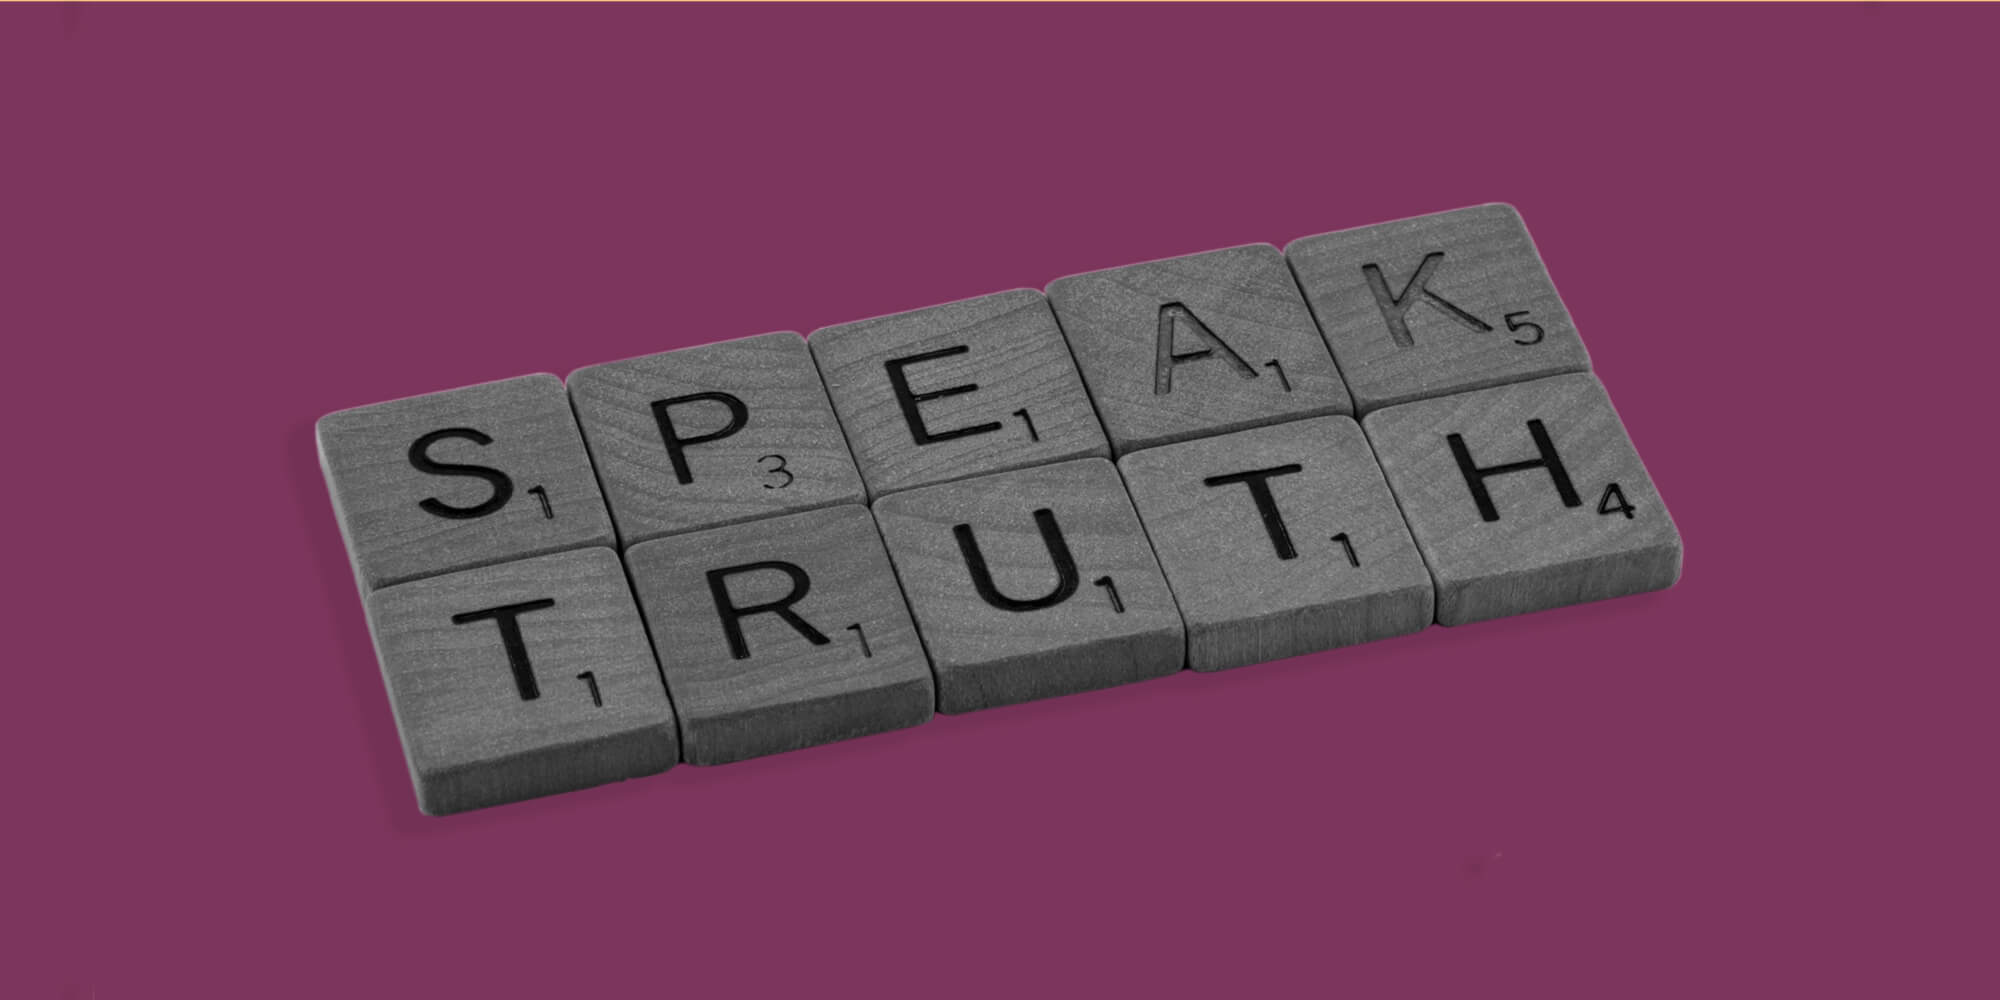 Scrabble tiles spell out "Speak Truth". Rationalizing drinking.